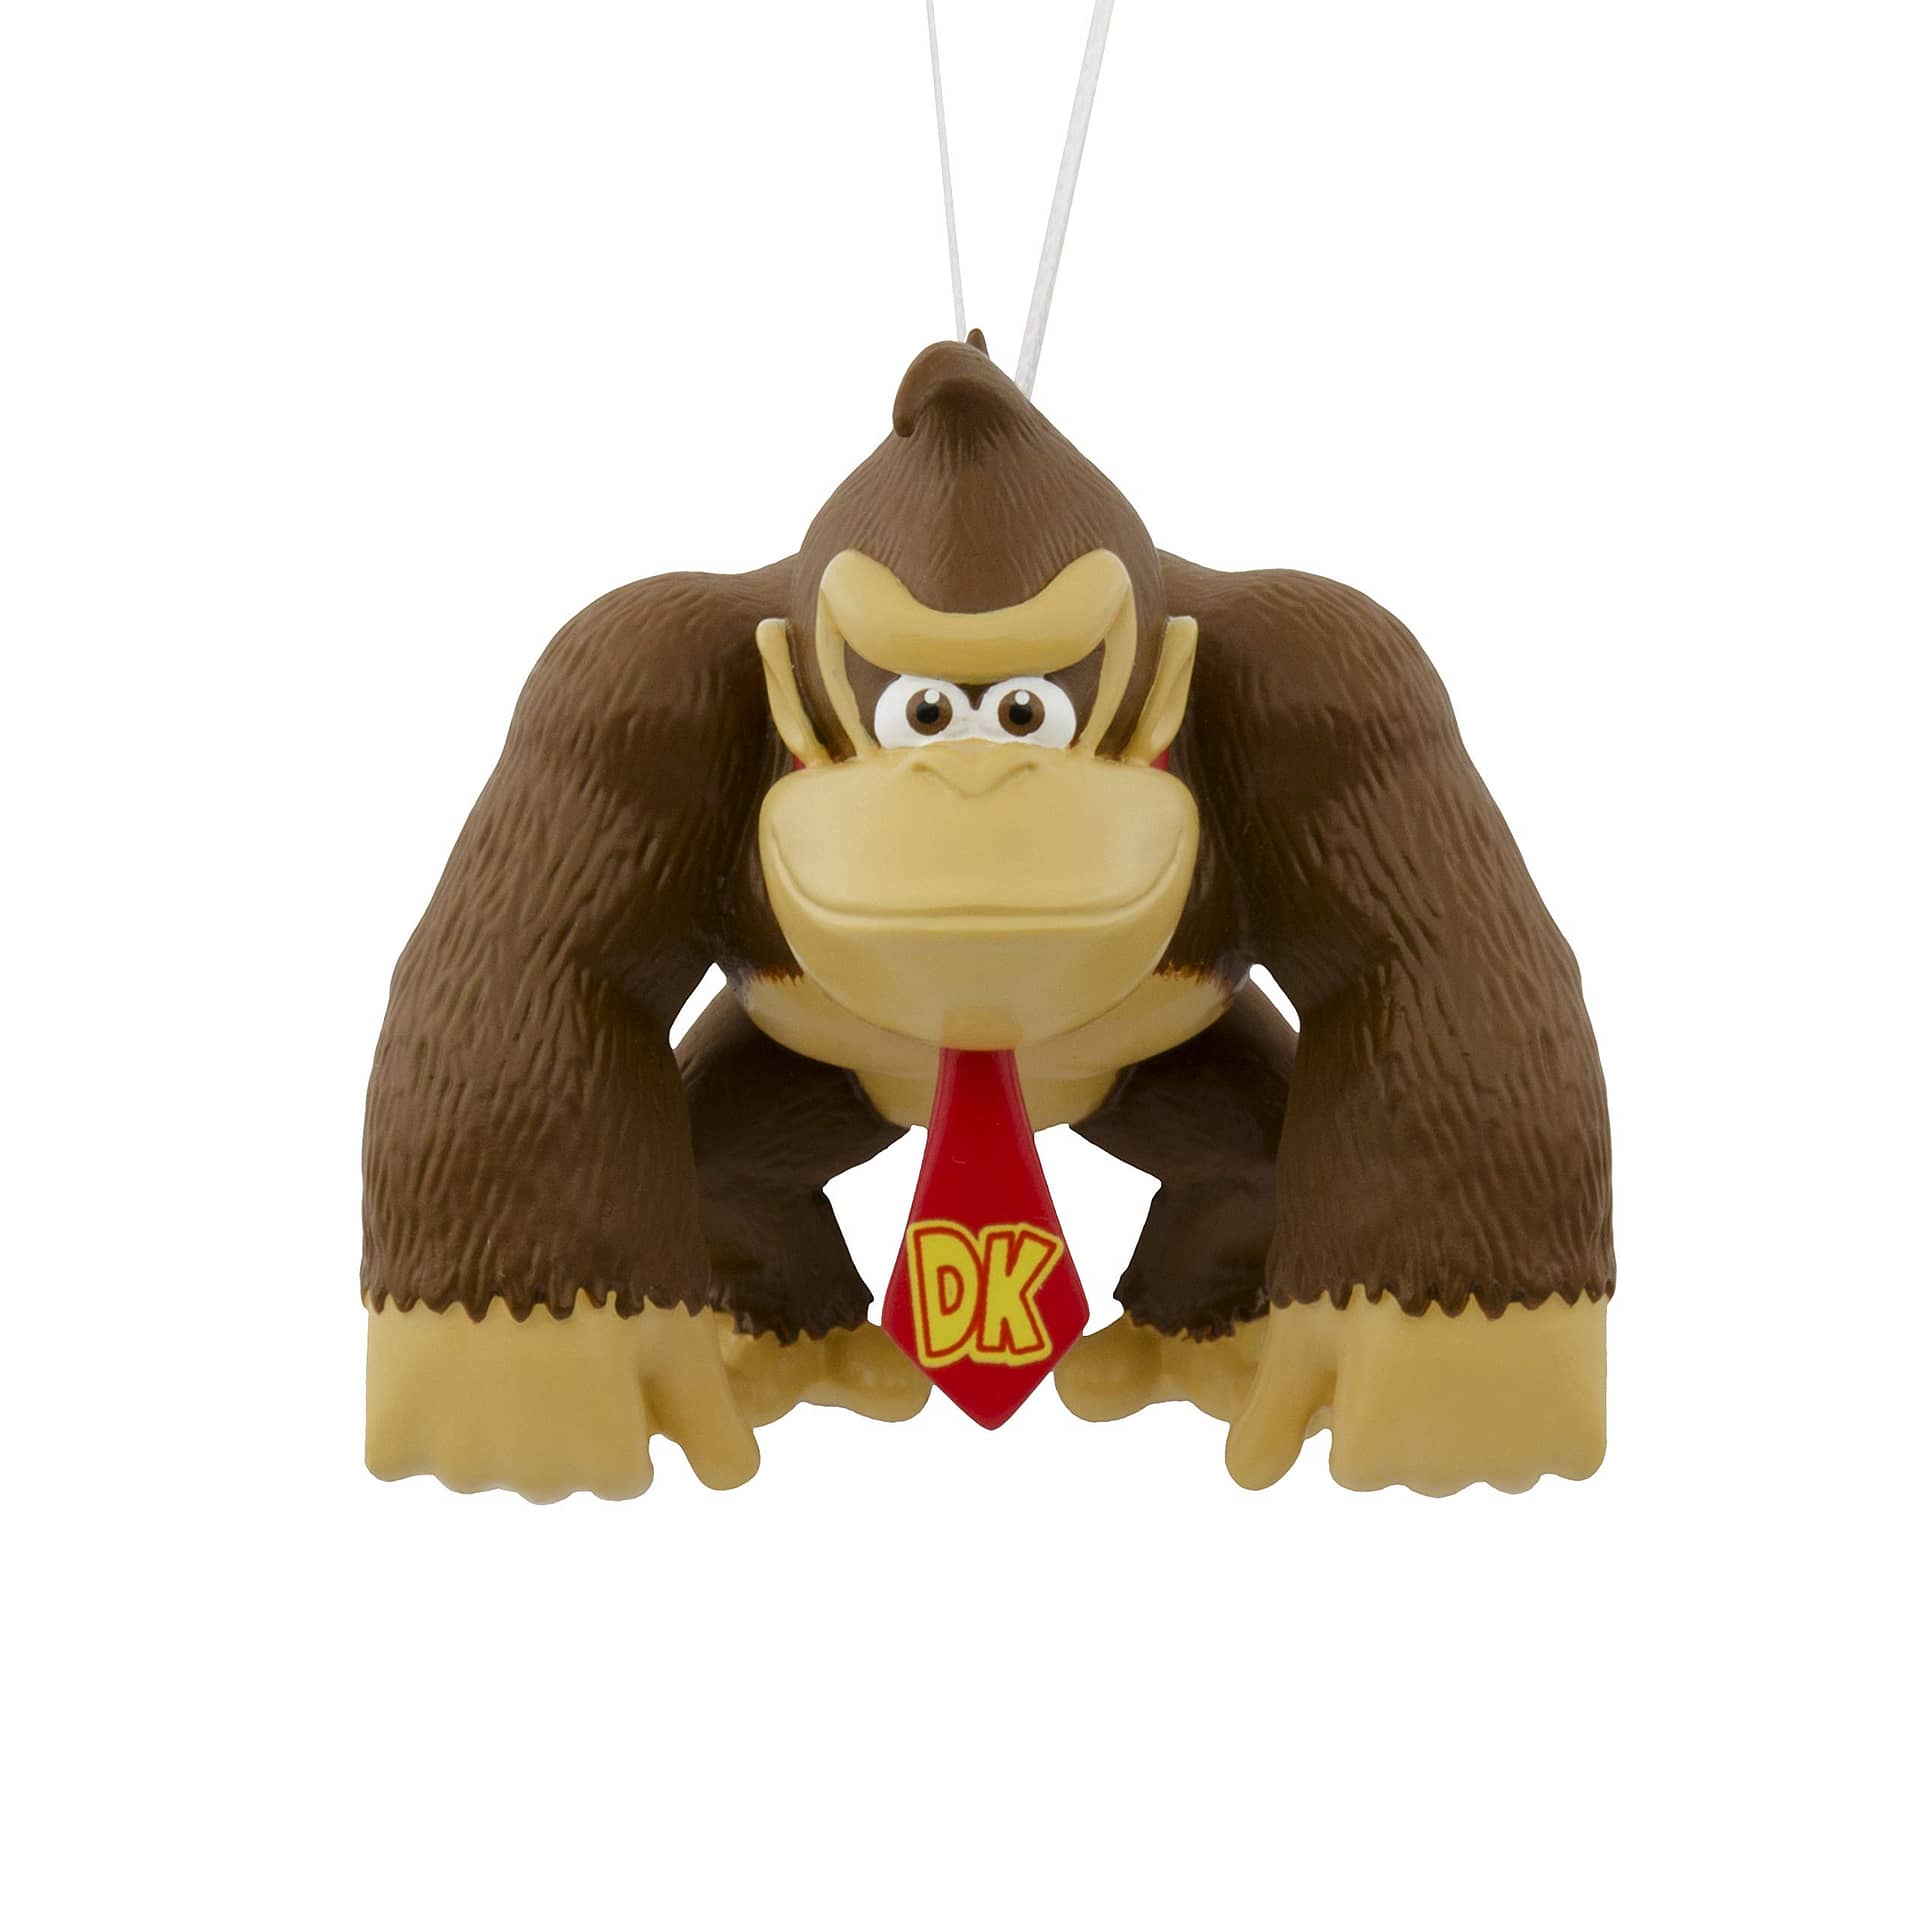 Christmas Nintendo Donkey Kong Ornament Personalized Gifts